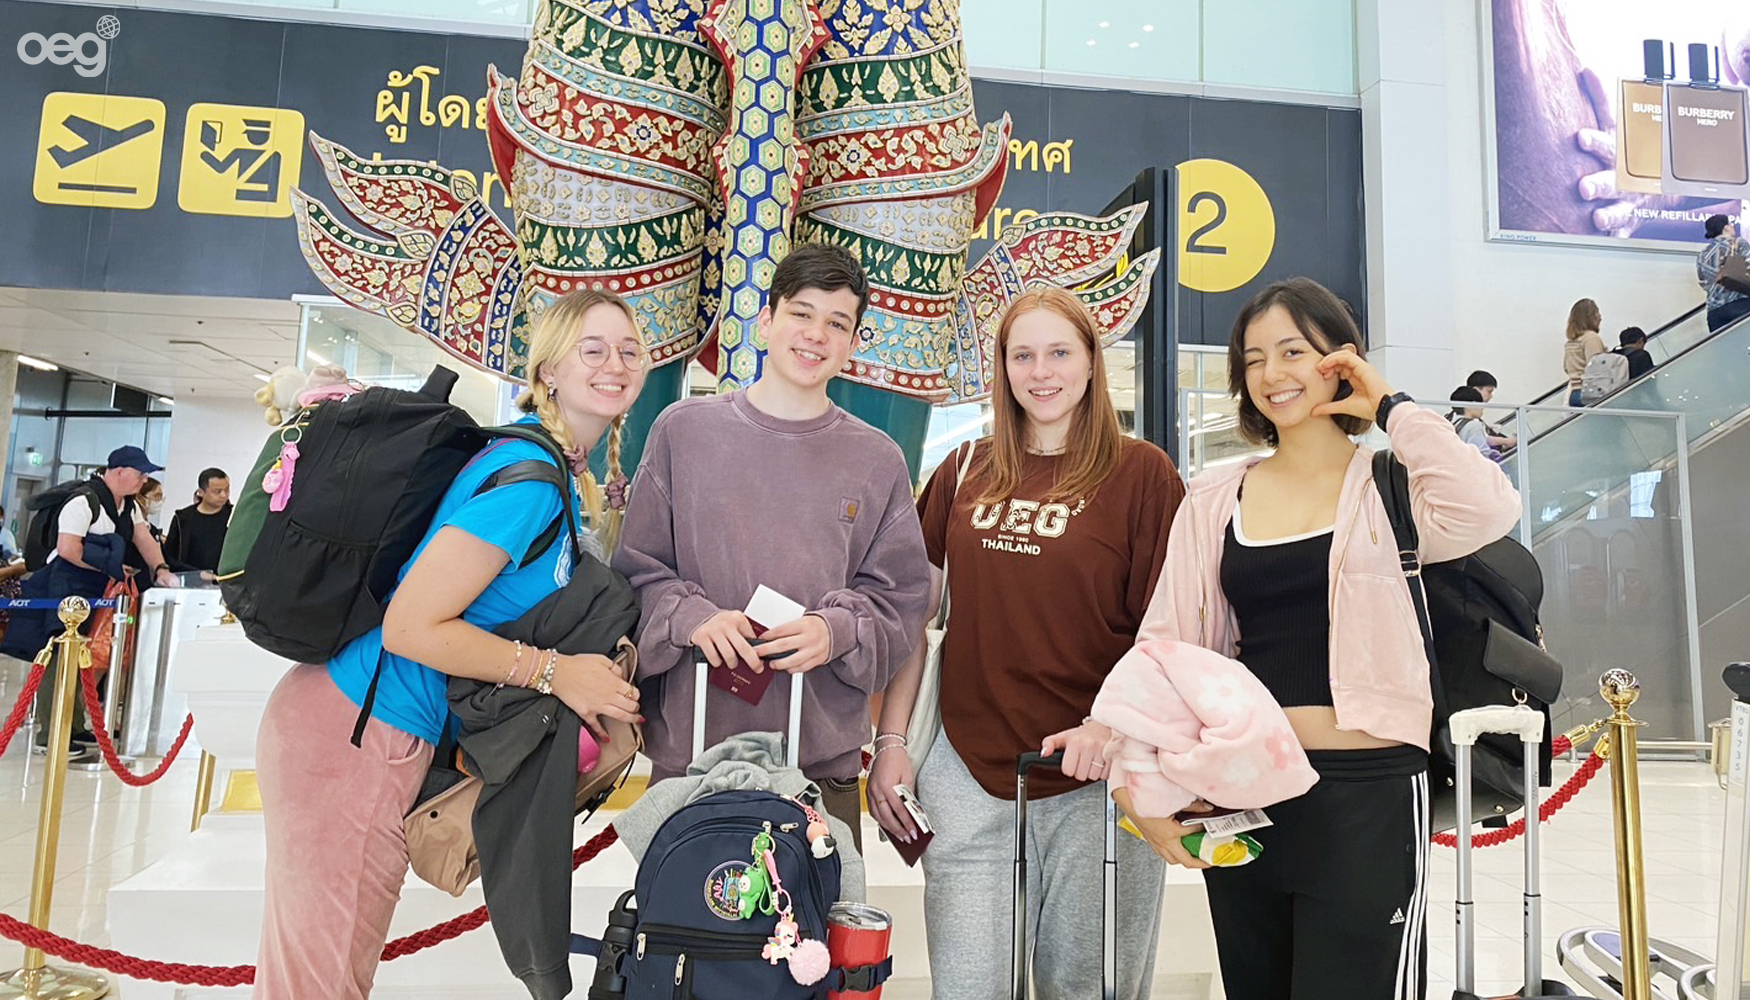 German exchange students at Suvarnabhumi Airport